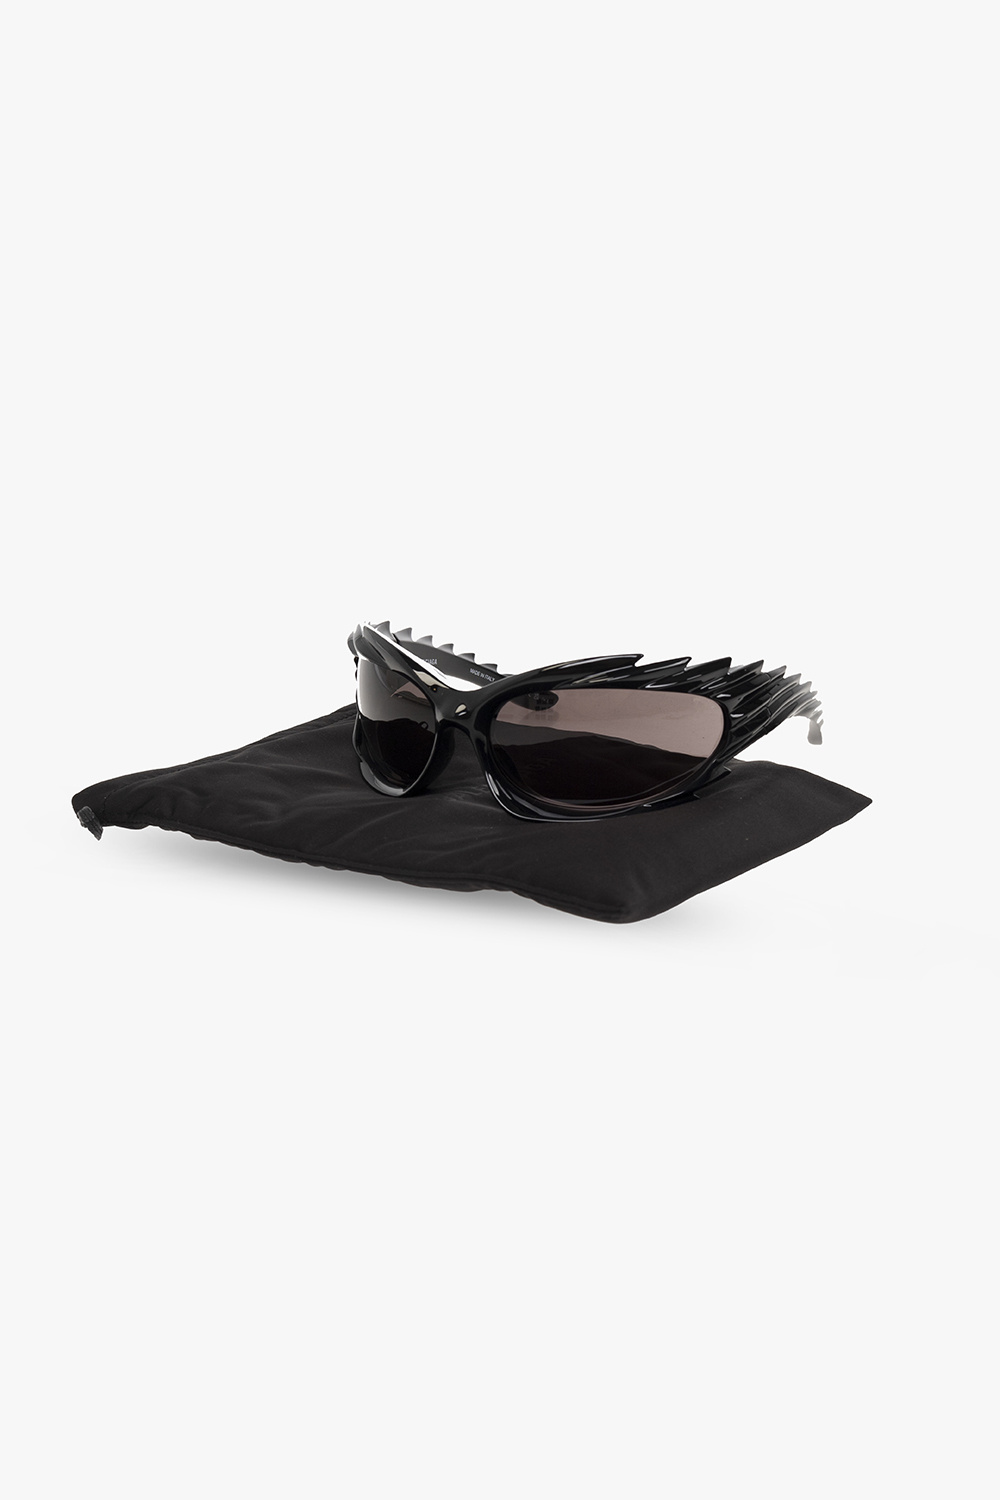 Balenciaga ‘Spike Rectangle’ sunglasses